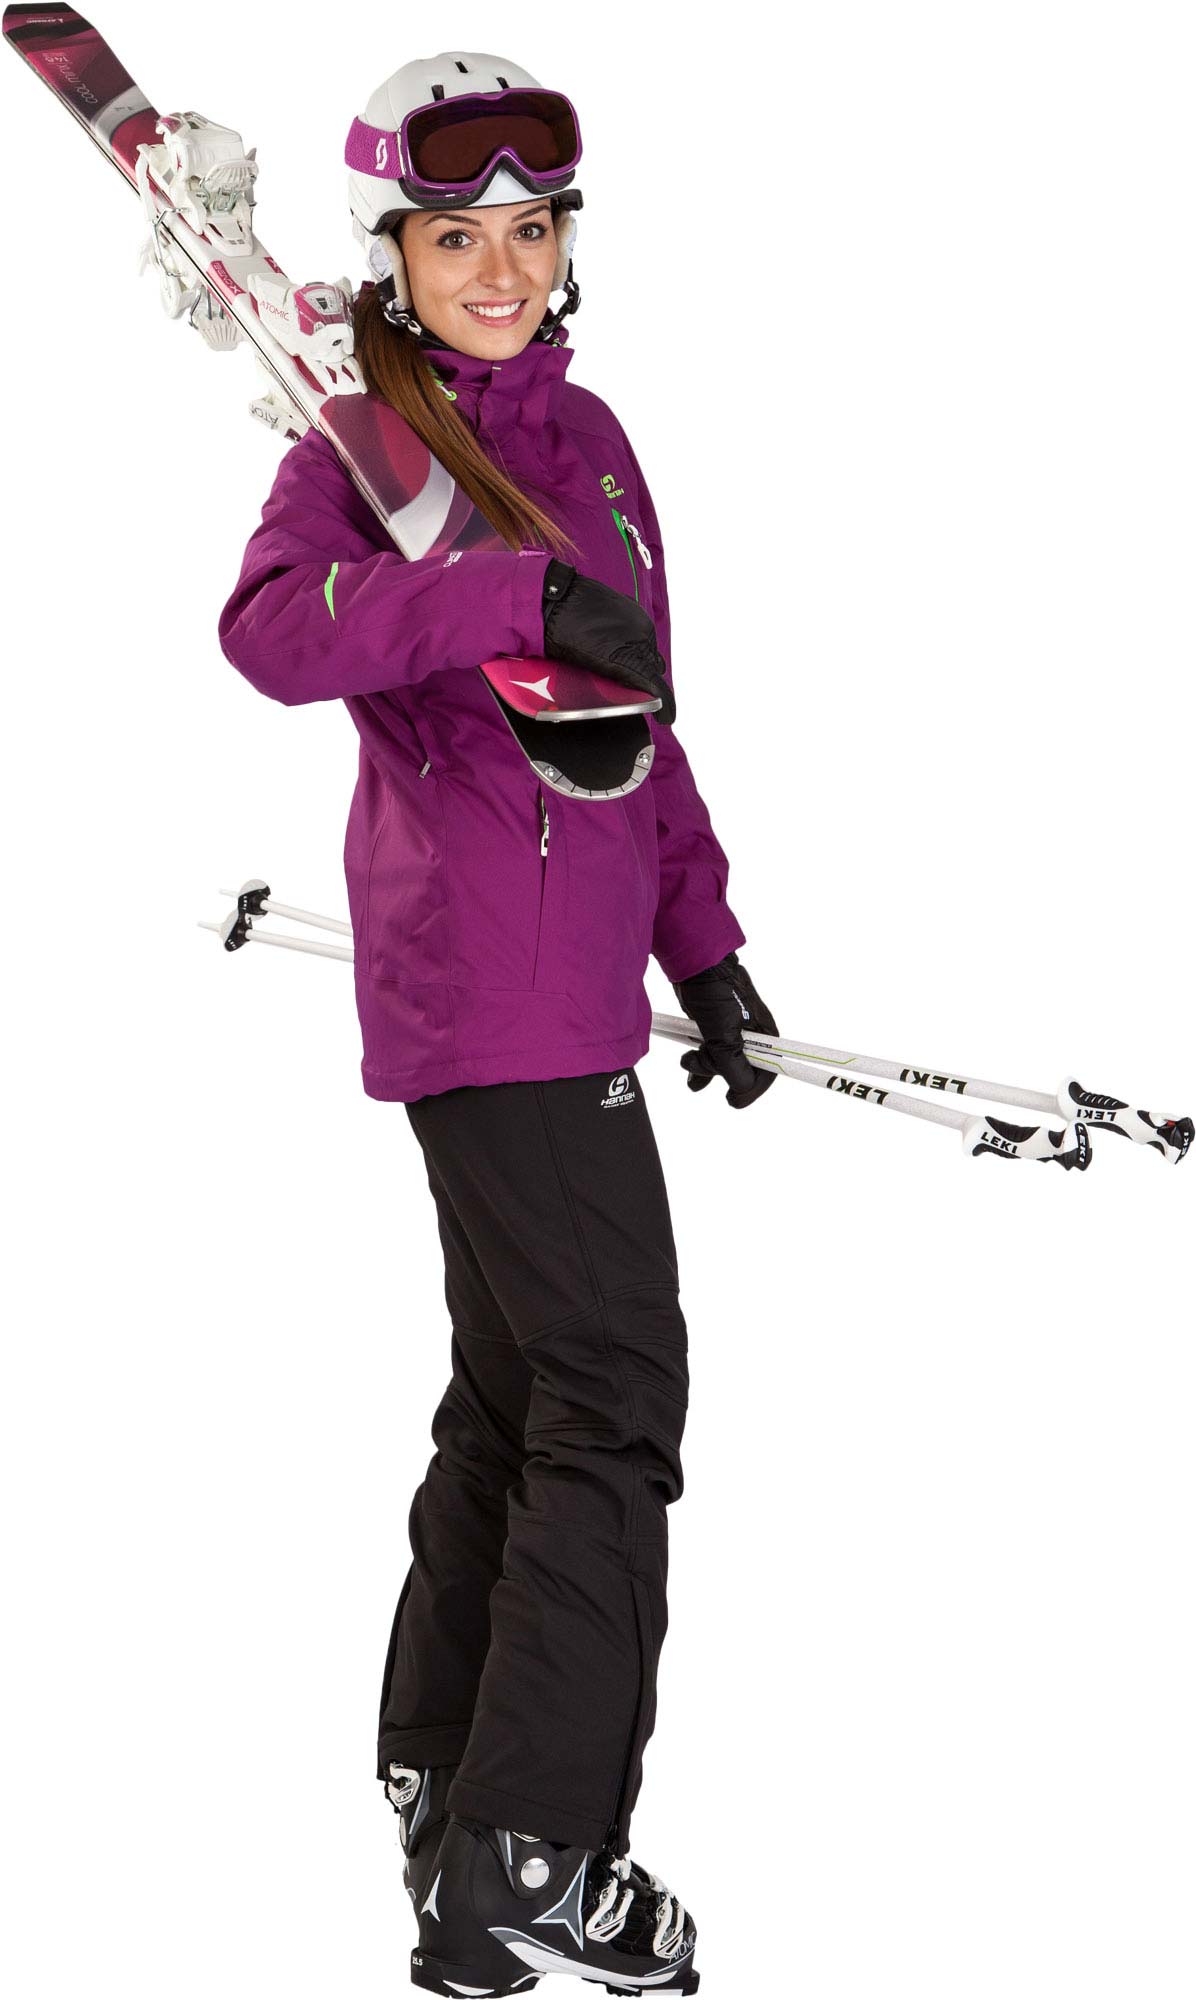 Women's Alpine Ski Boots